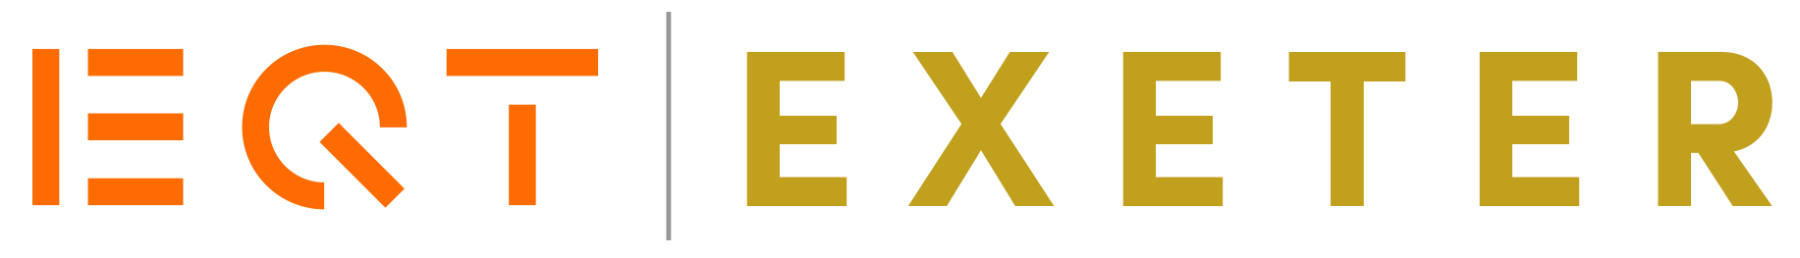 EQT Exeter logo | Industrial Construction | ARCO Design Build